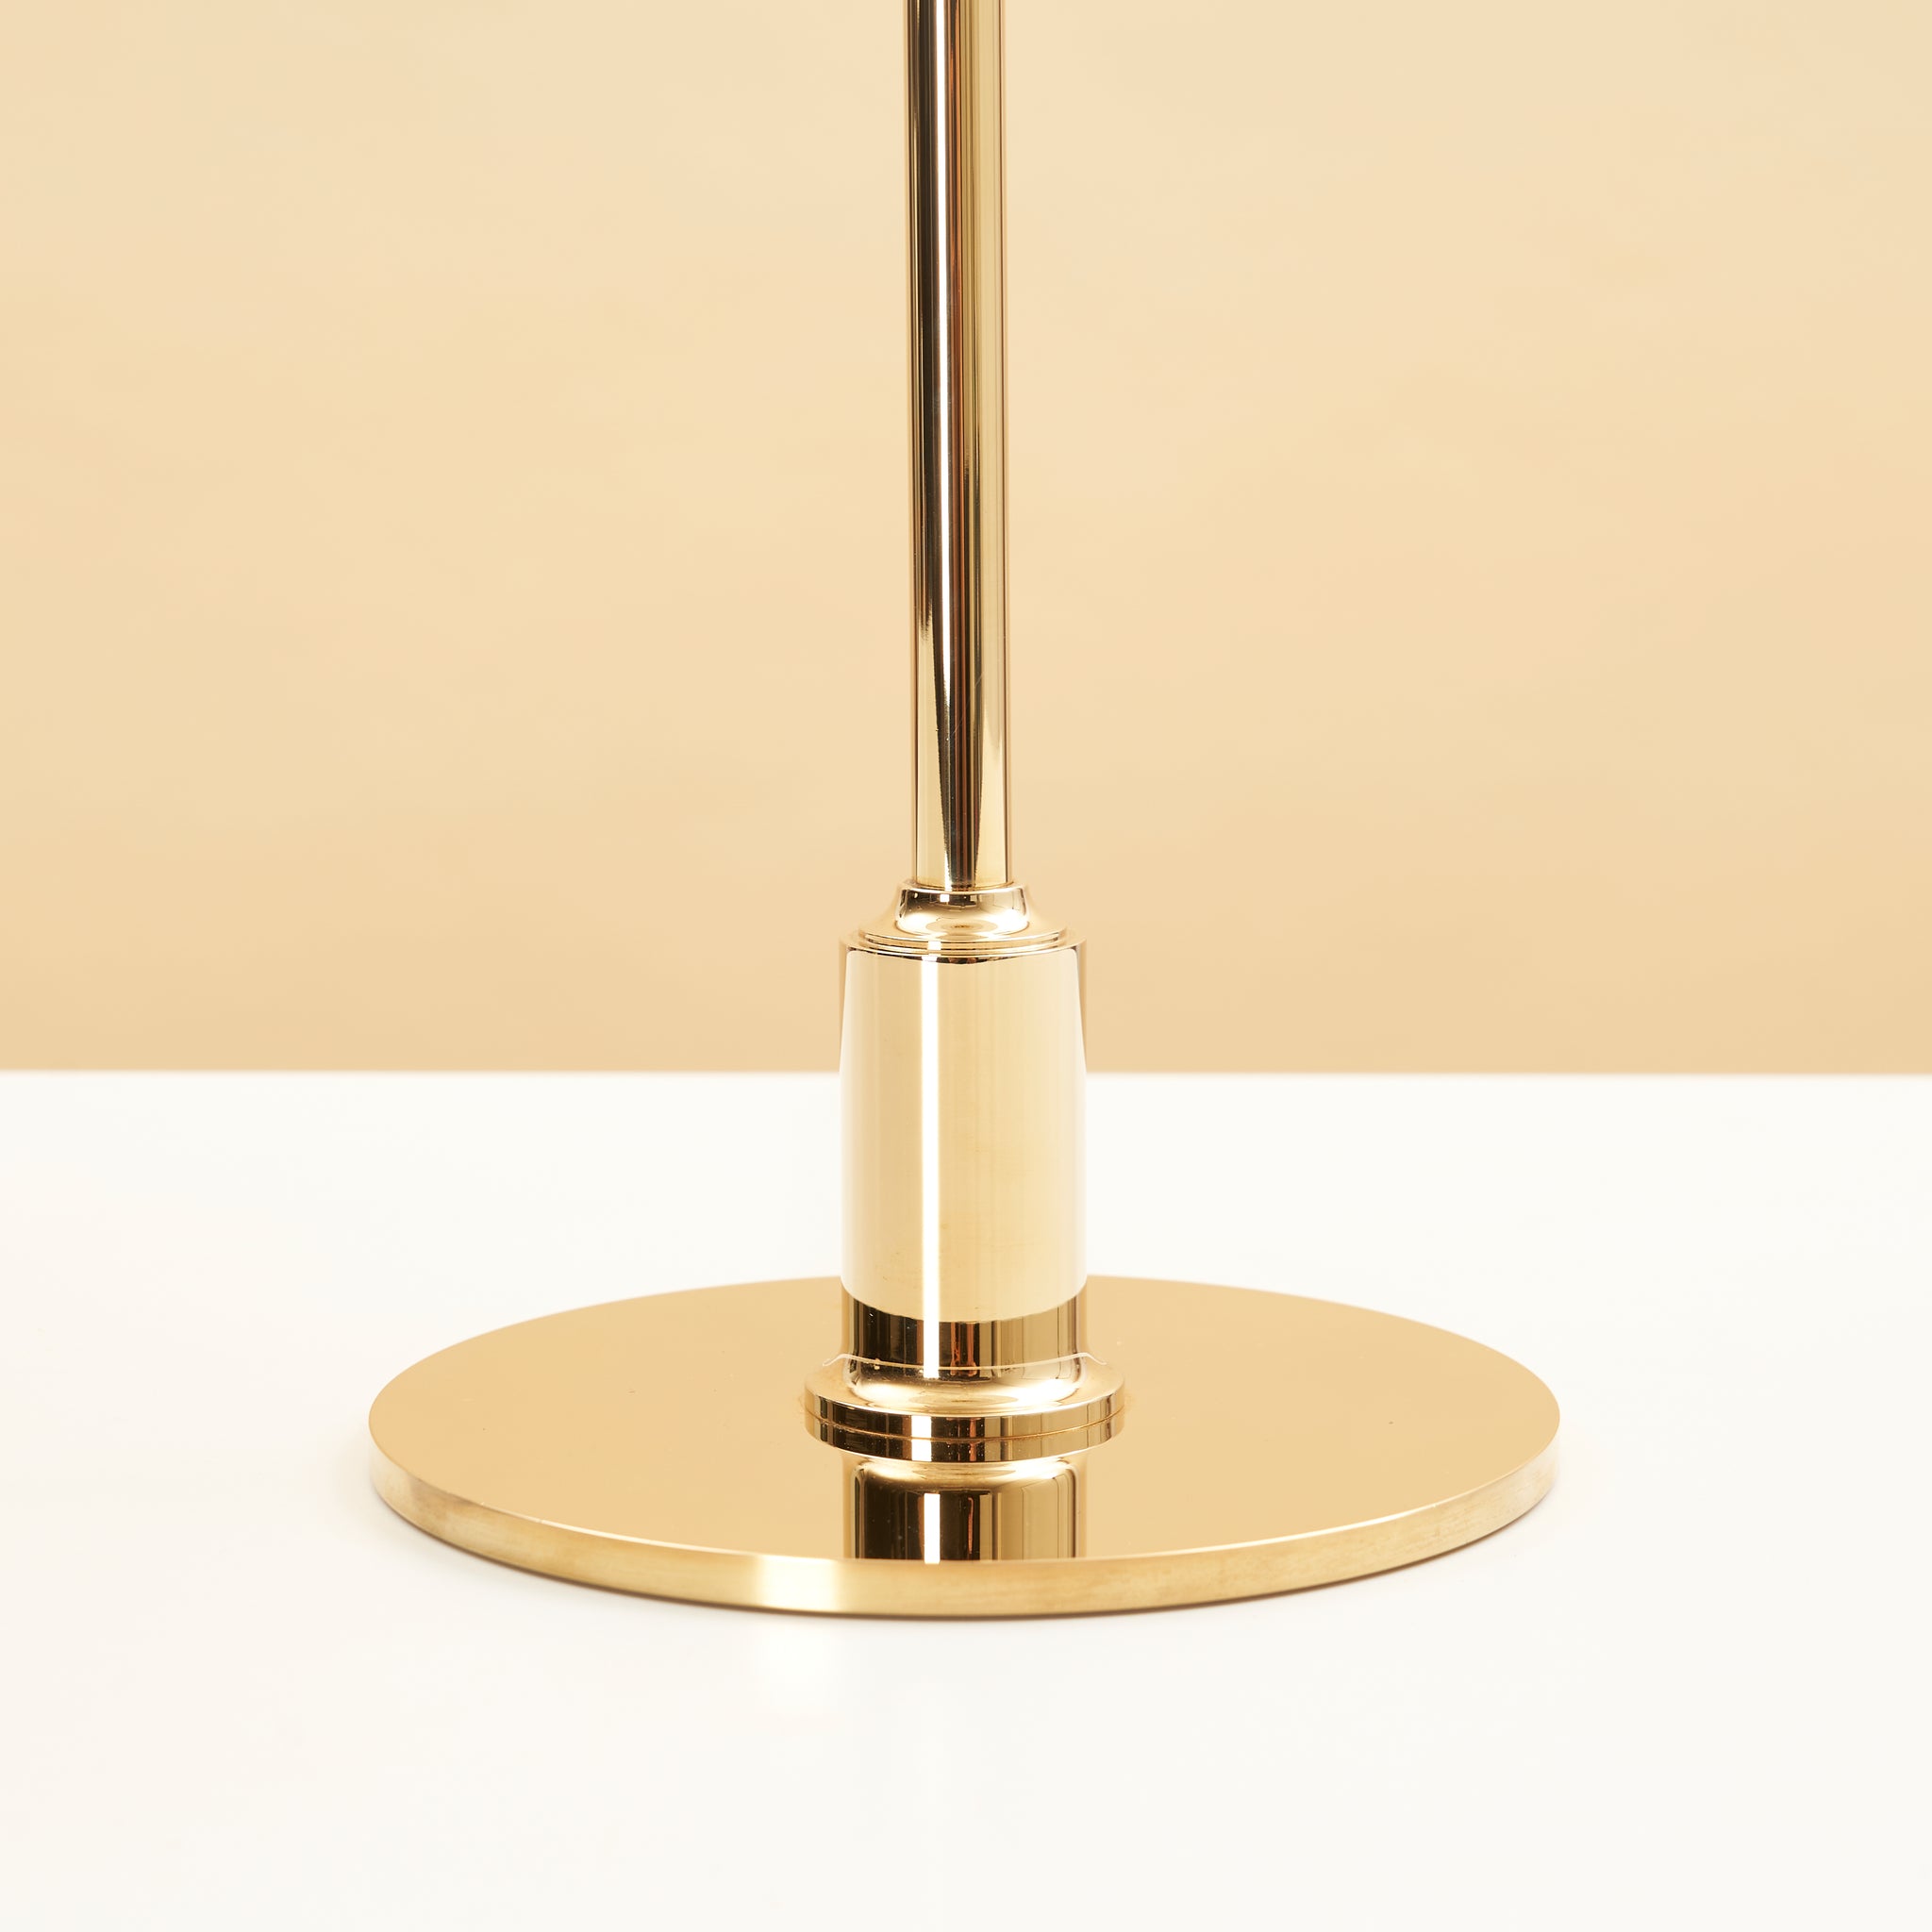 'PH 3/2' Table Lamp by Poul Henningsen for Louis Poulsen